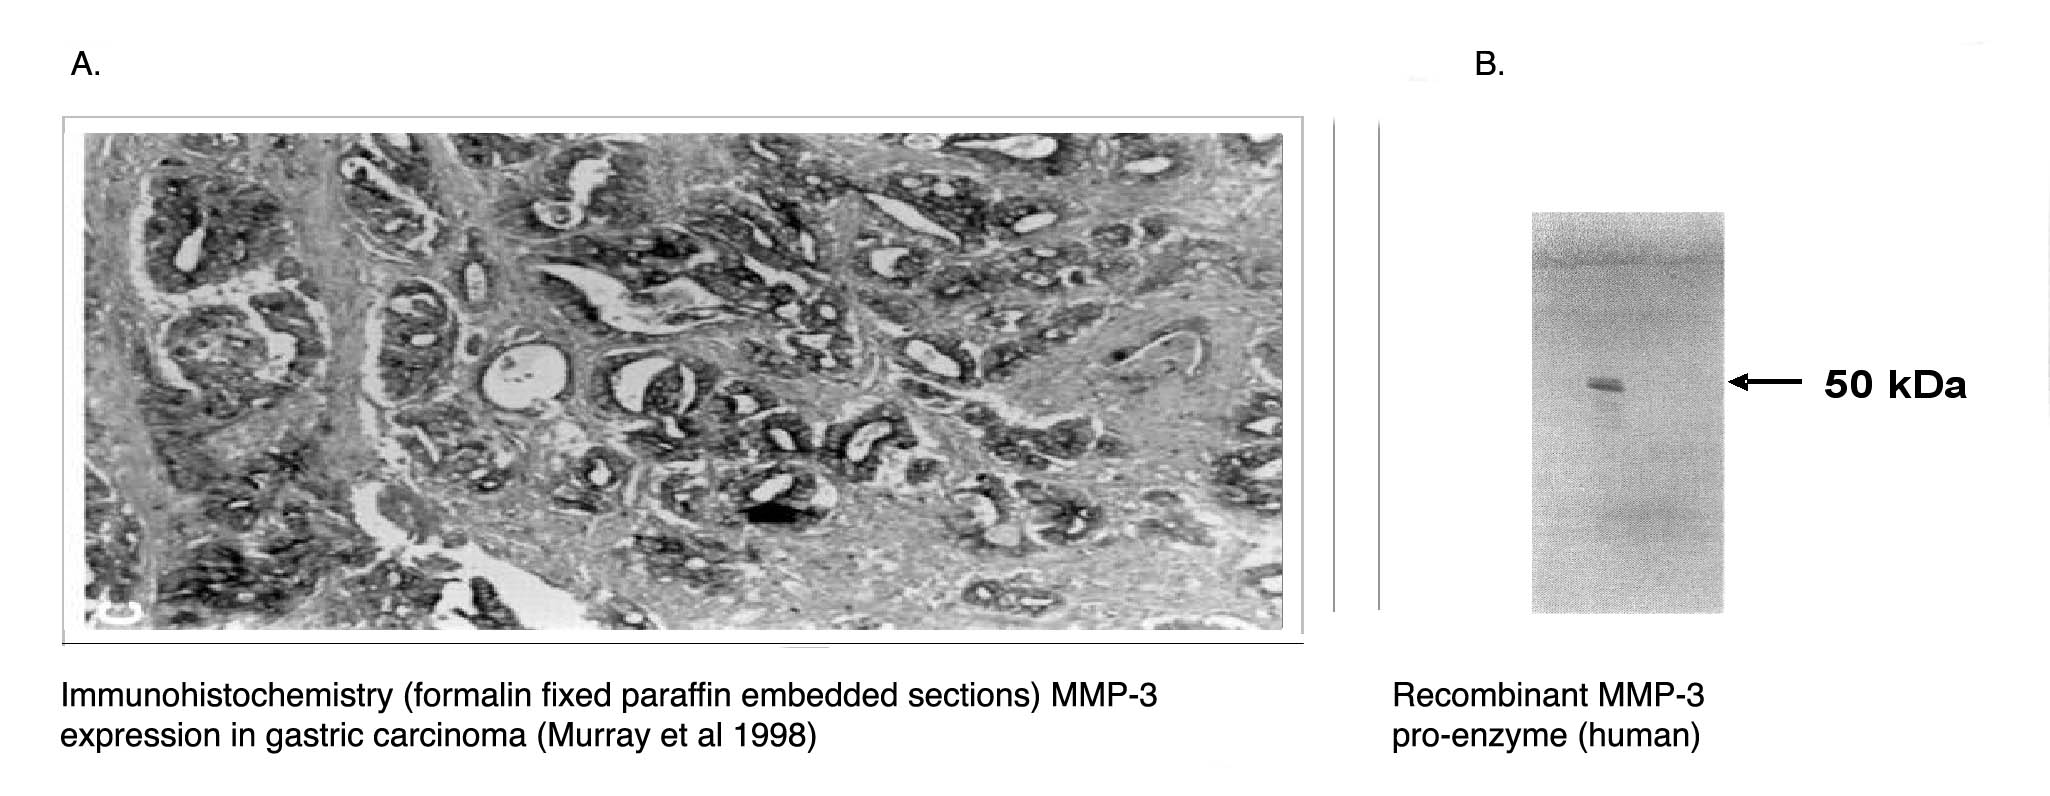 "
Left:  Immunohistochemical staining of human gastric carcinoma tissue using MMP-3 antibody (Cat. No. X2055M).
Right:  Western blot of recombinant human MMP-3 proenzyme using MMP-3 antibody."